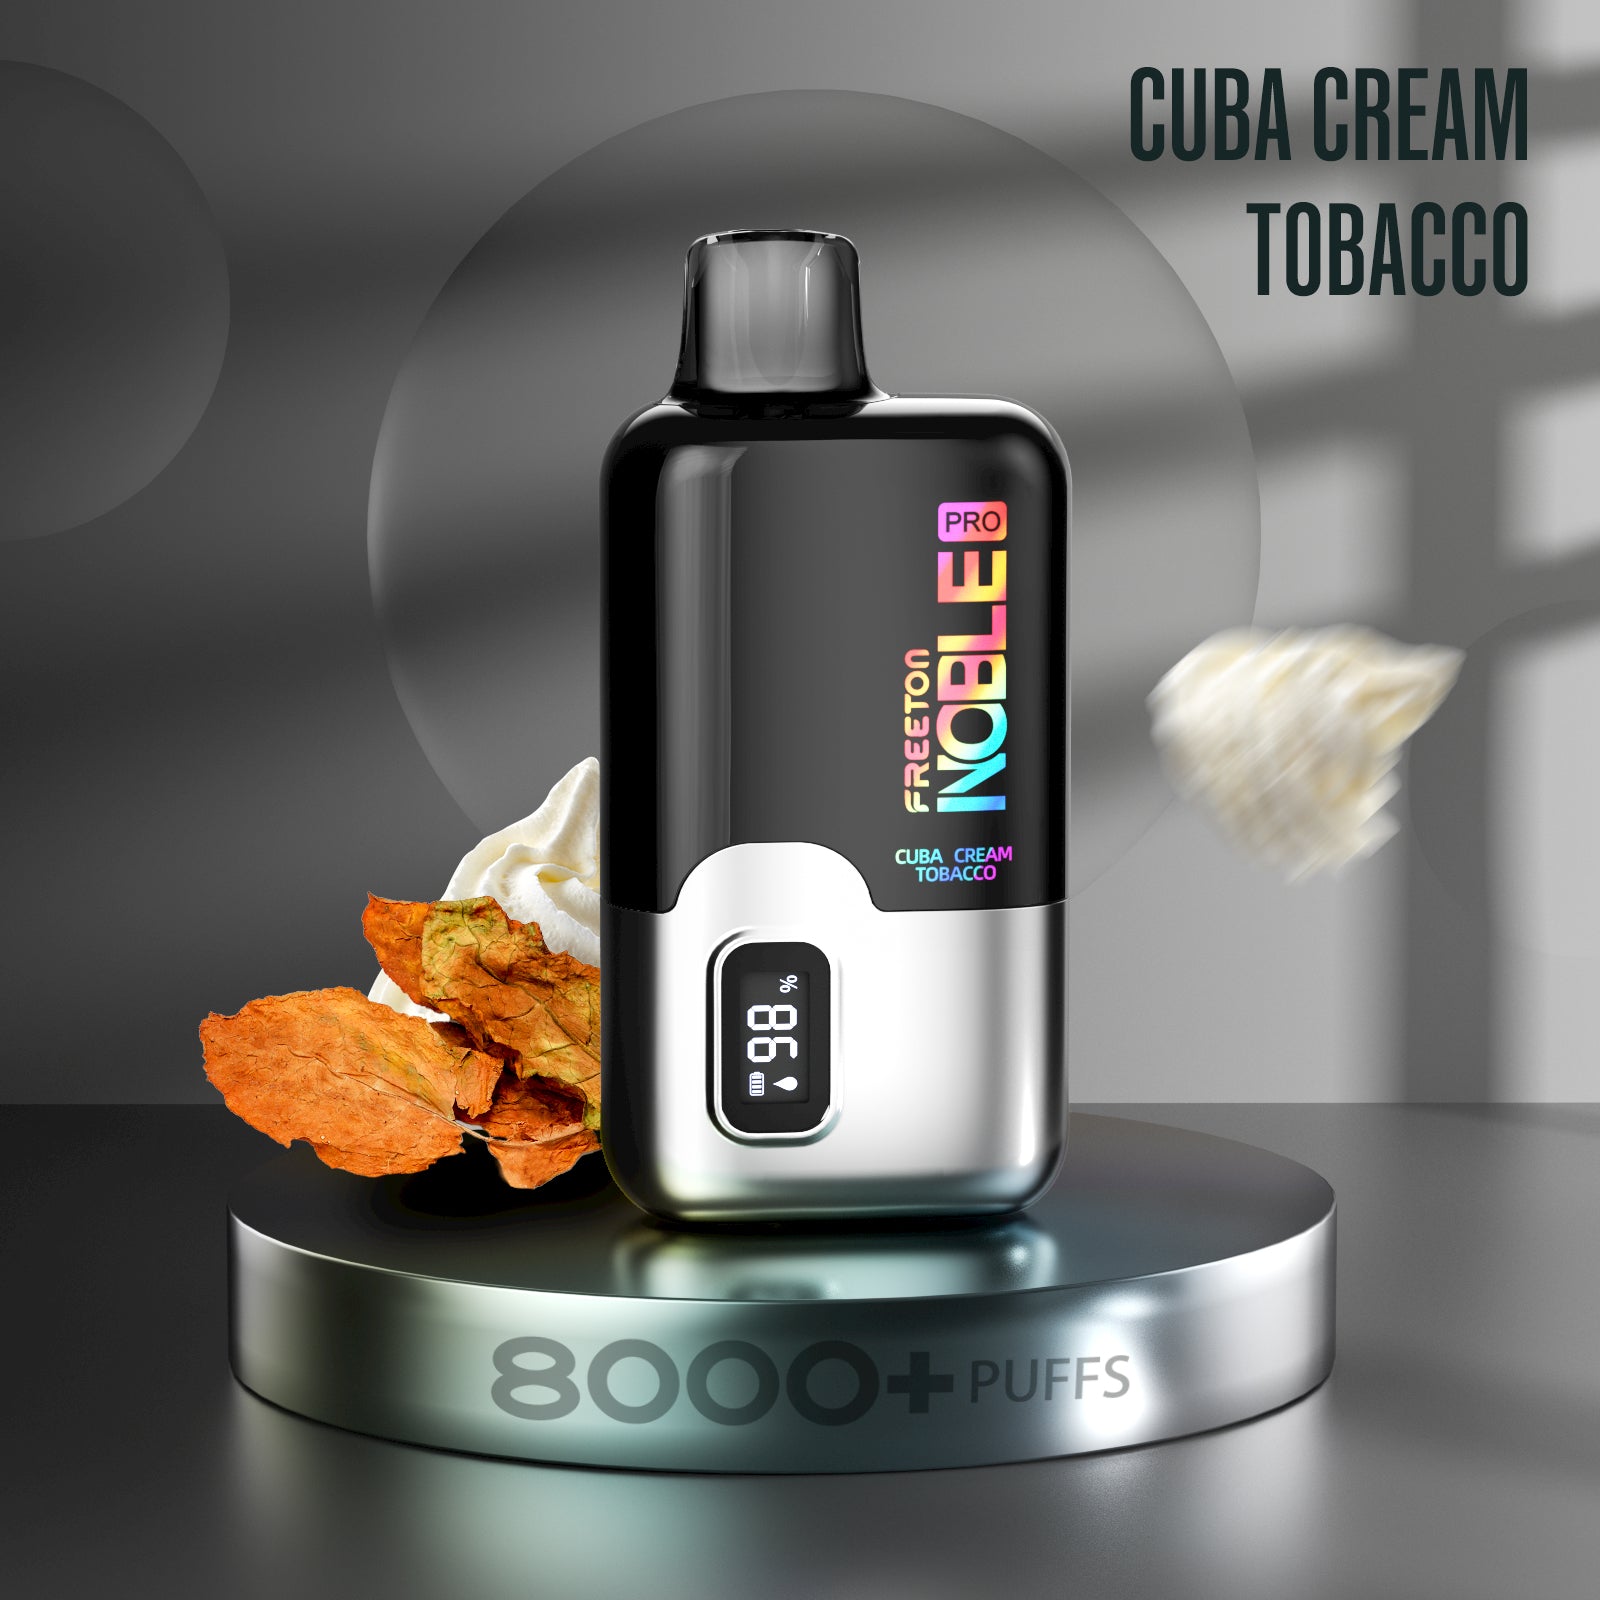 Freeton Noble Pro Cuba Cream Tobacco 8000+ Puffs